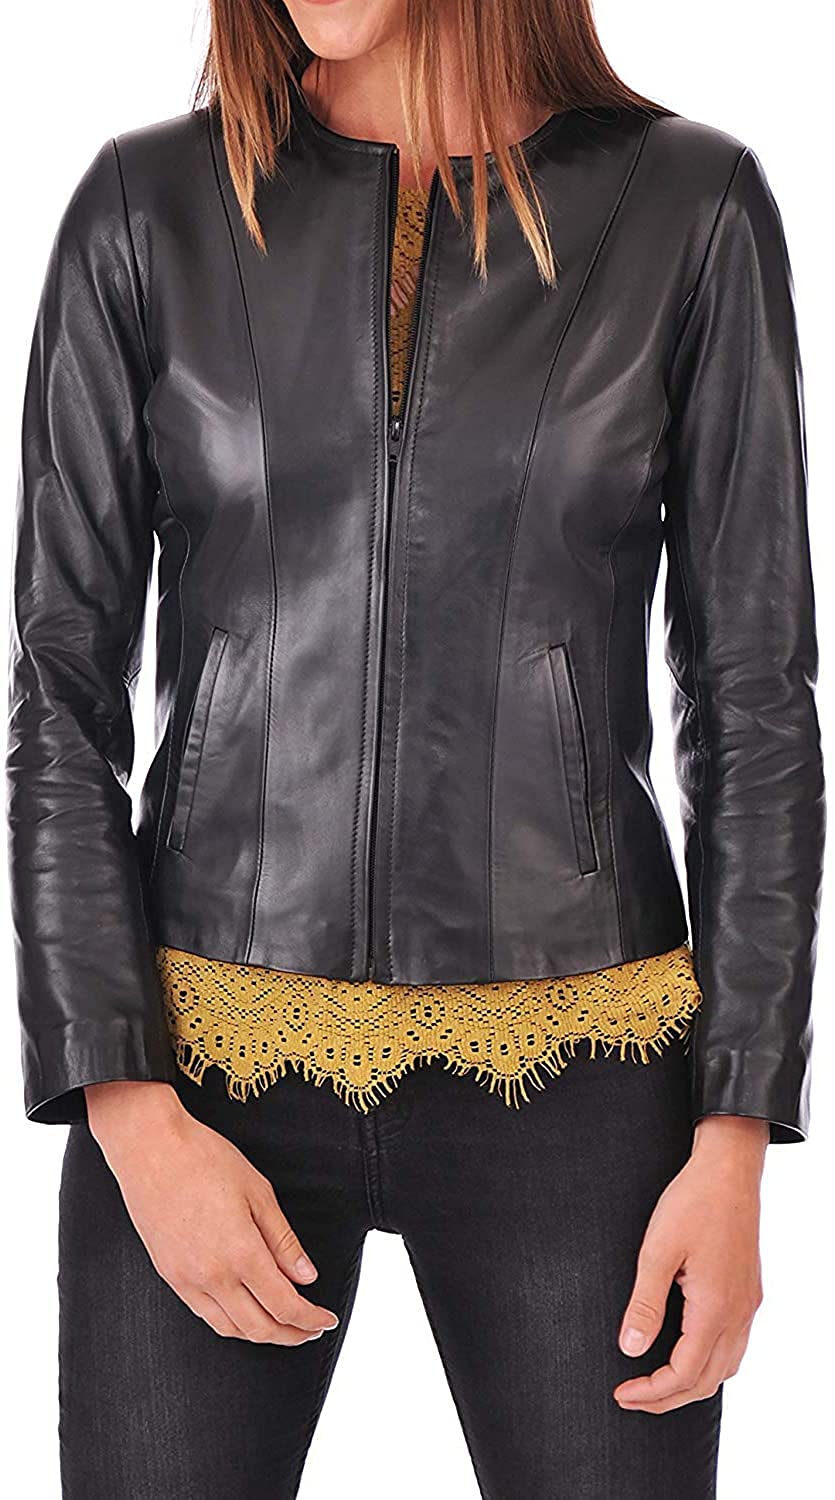 100% Leather Jacket for Women - Collarless Deep Neck & Slim Fit - Moto, Bomber, Biker Winter Casual Wear